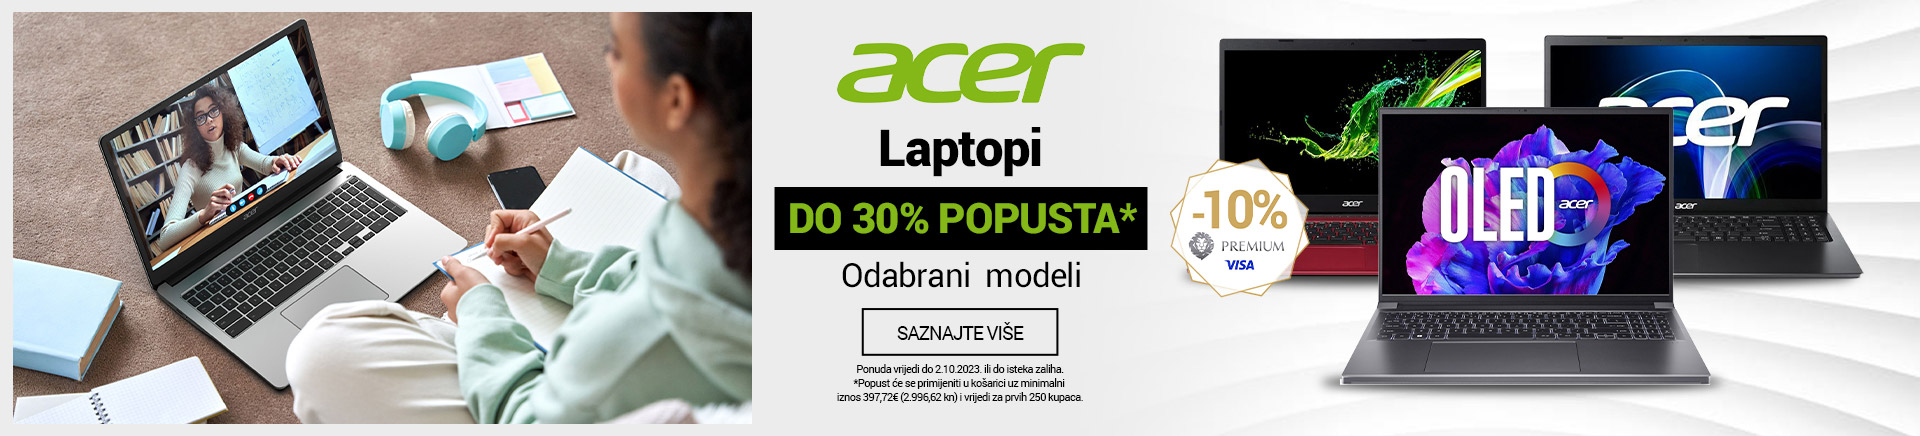 HR Acer laptopi 30posto Premium Visa MOBILE 380 X 436.jpg